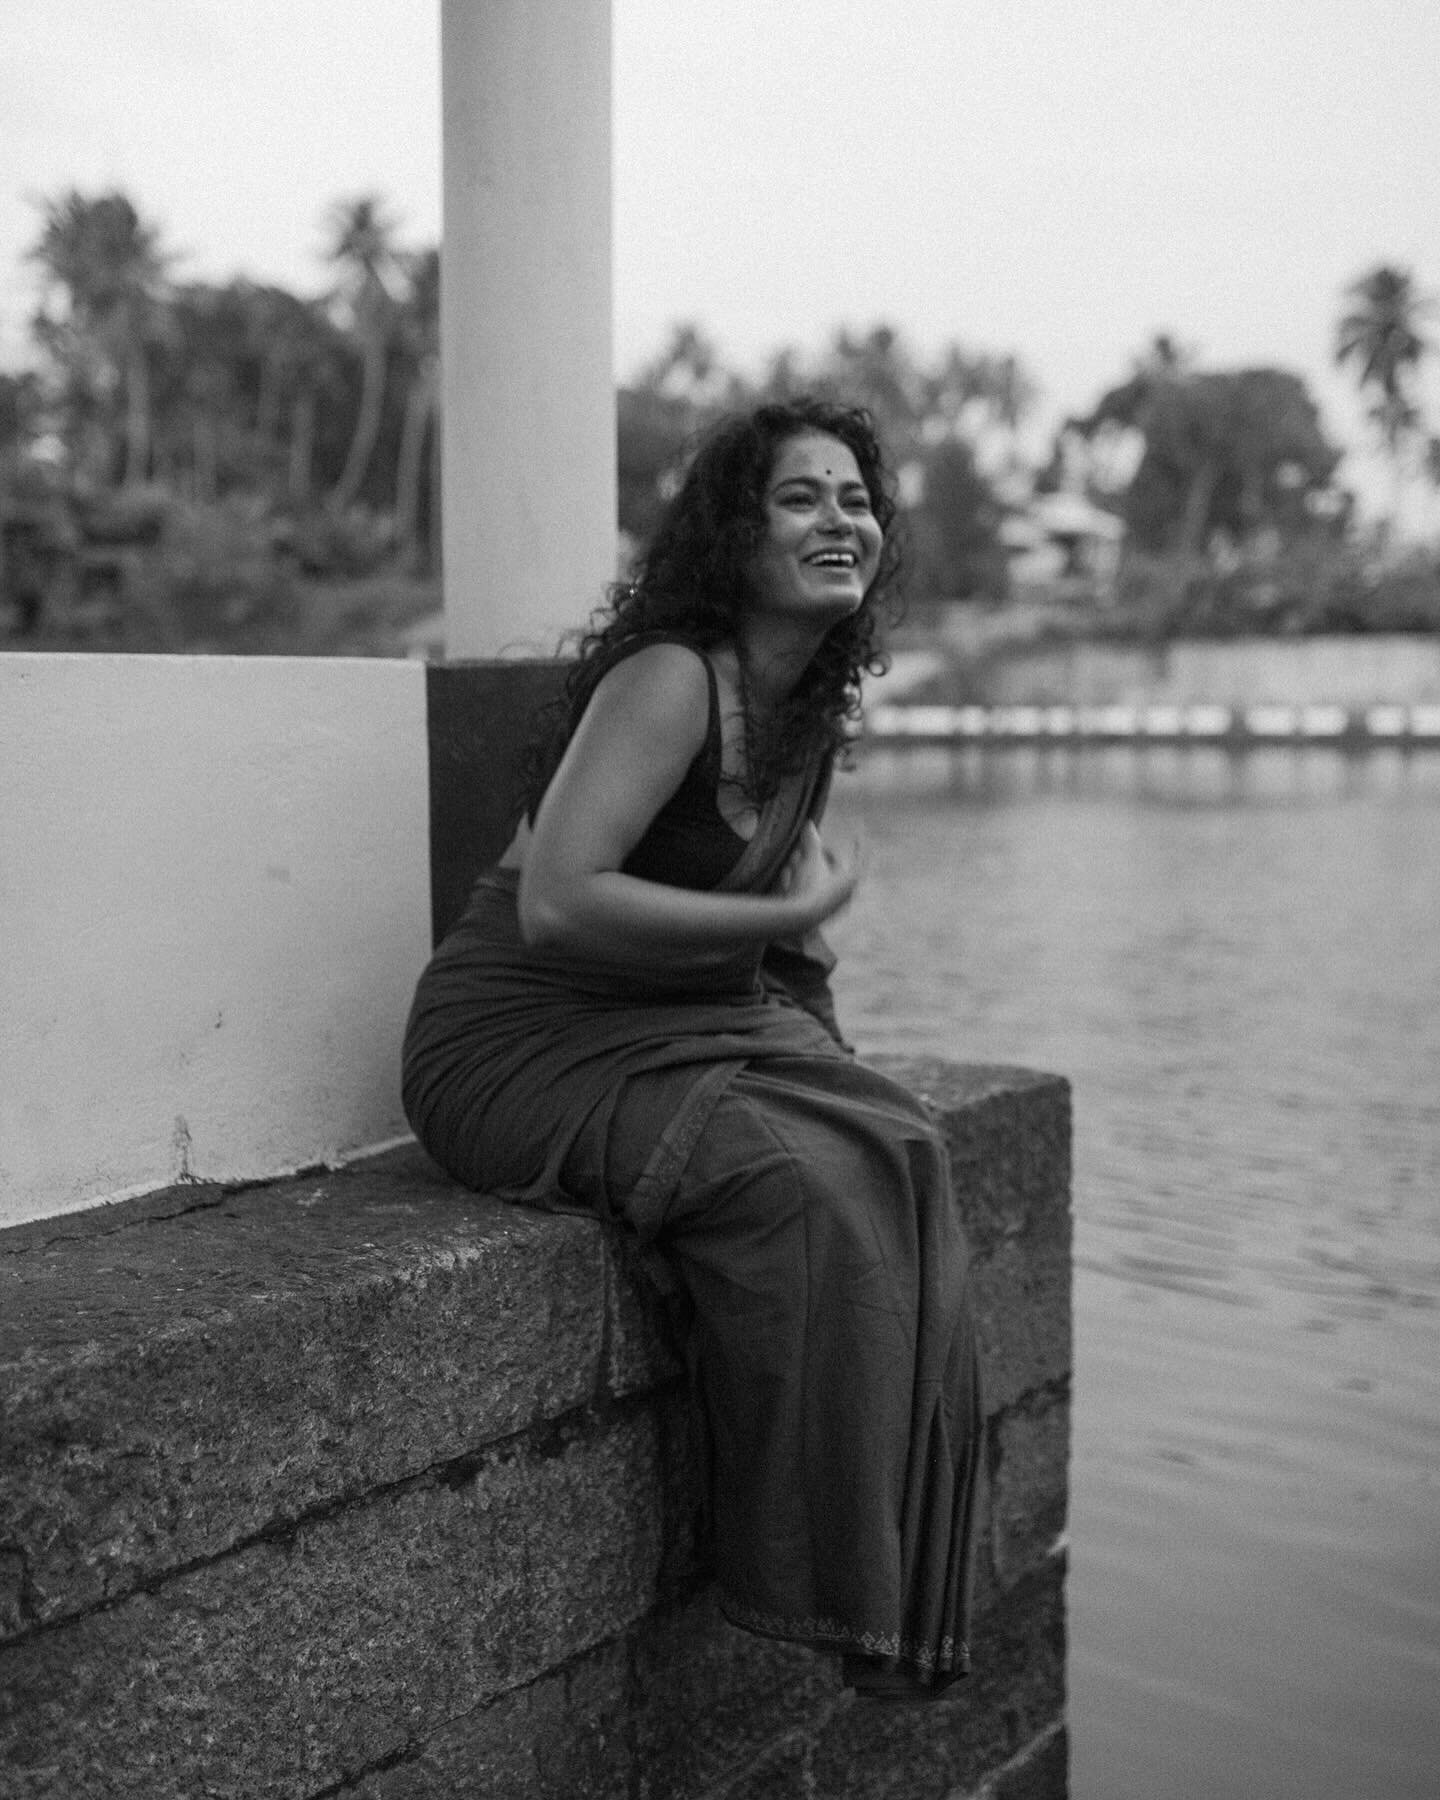 Bliss &amp; Happiness moment at the temple 🛕 💗
@iamrashmita555 
.
.
.
#photography #blackandwhitephotography #indianbeauty #kerala #keralaphotography #varkala #nikonphotography #portraitphotography #studiopushpa #photographers_of_india #frenchphoto